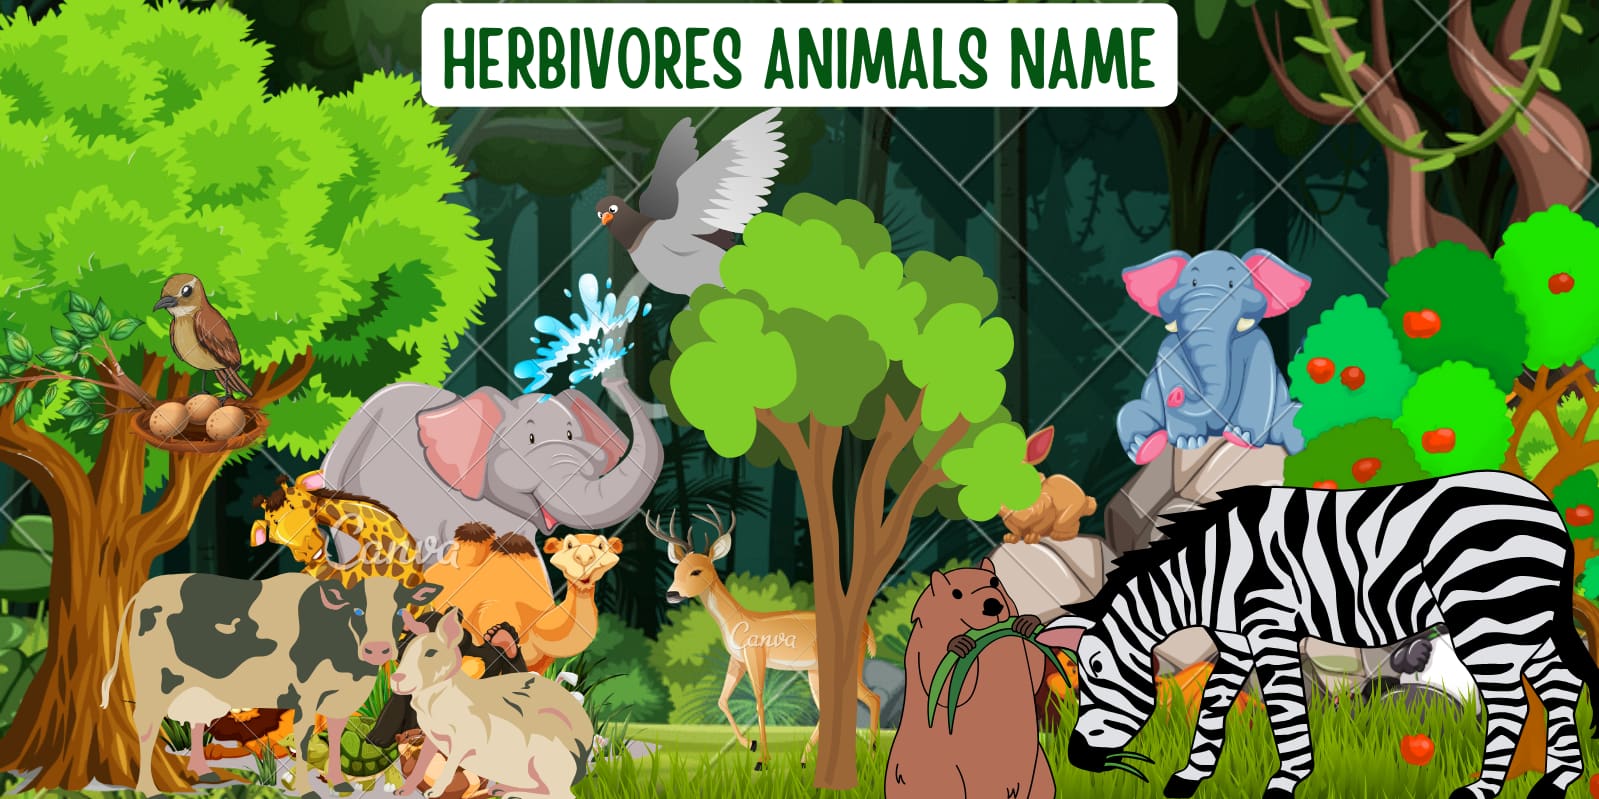 Herbivores animals name